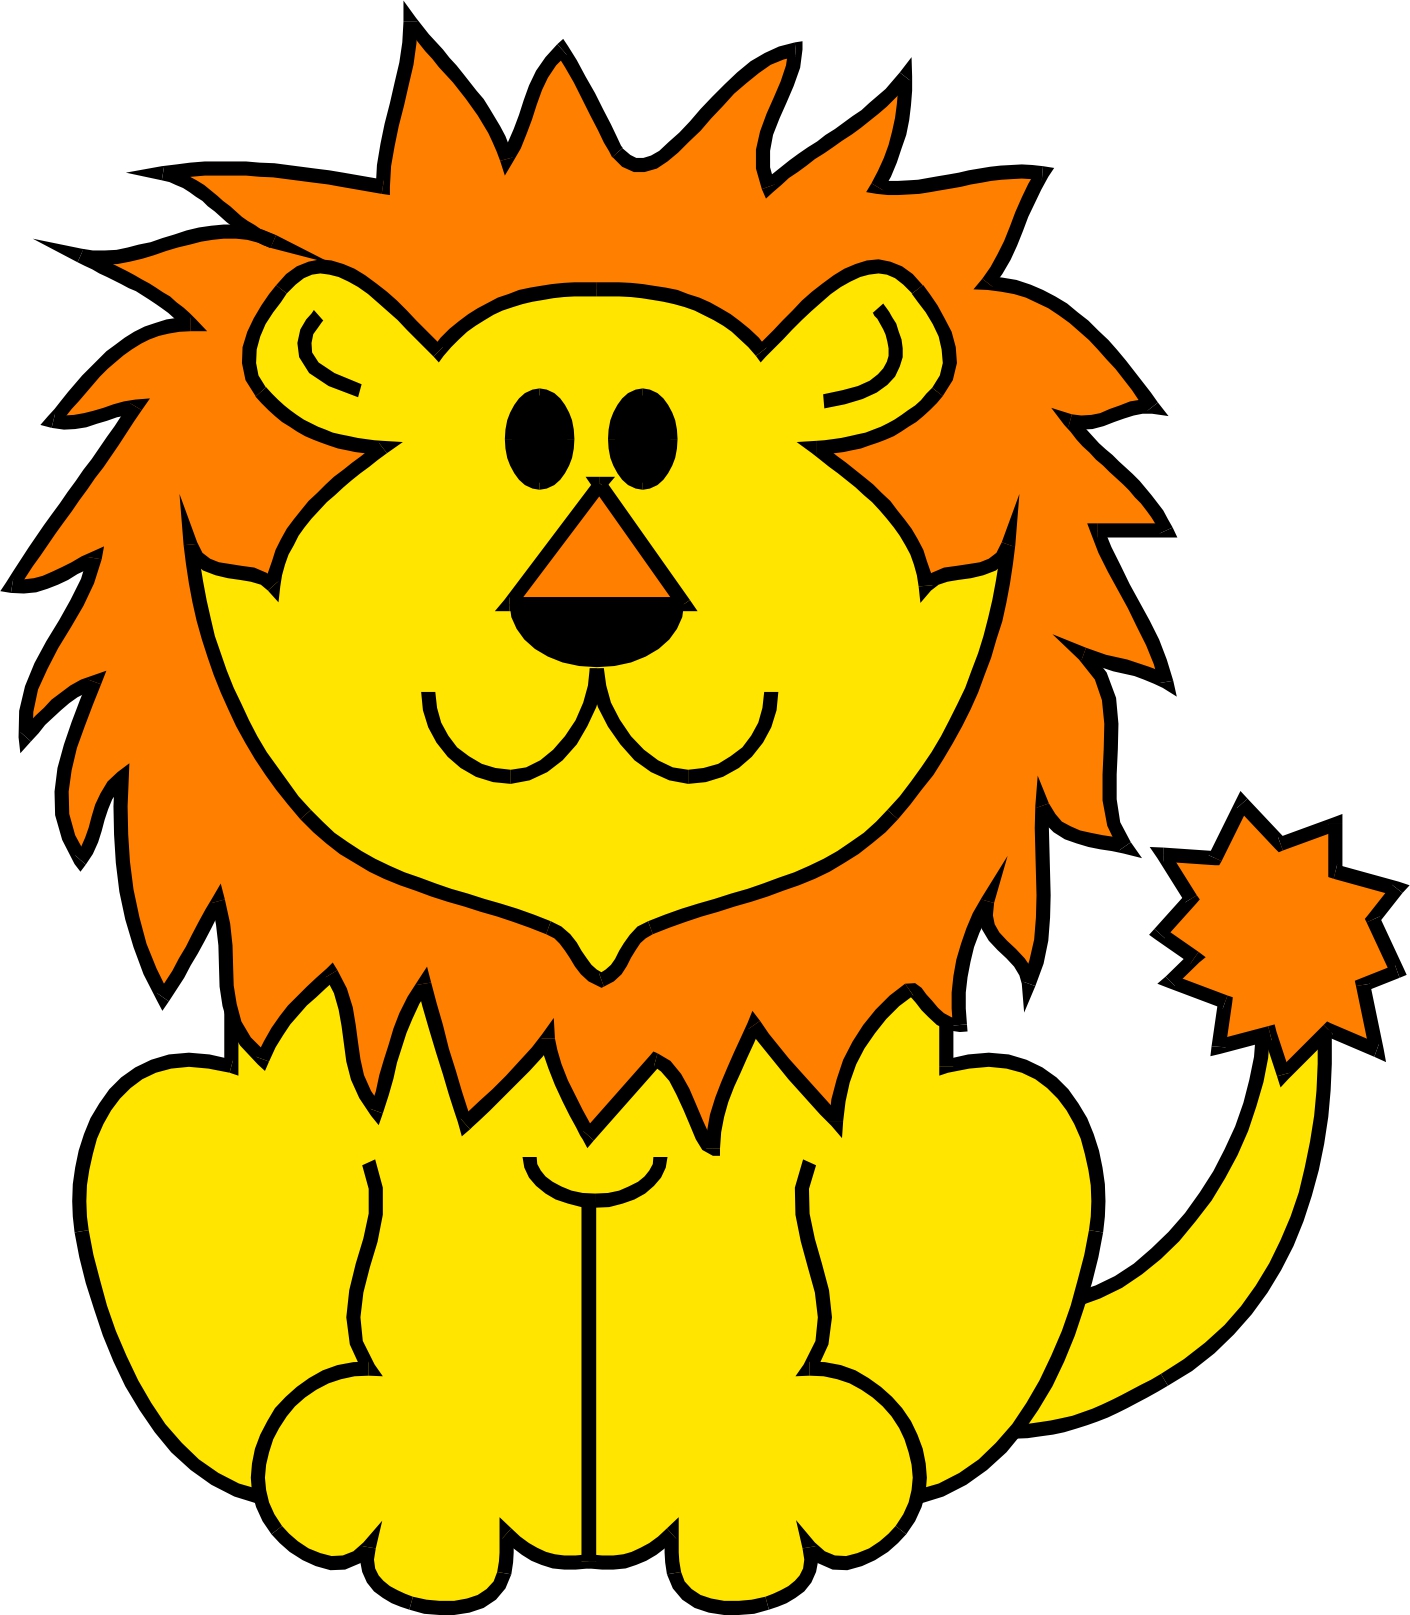 Free Lion Images Cartoon, Download Free Lion Images Cartoon png images